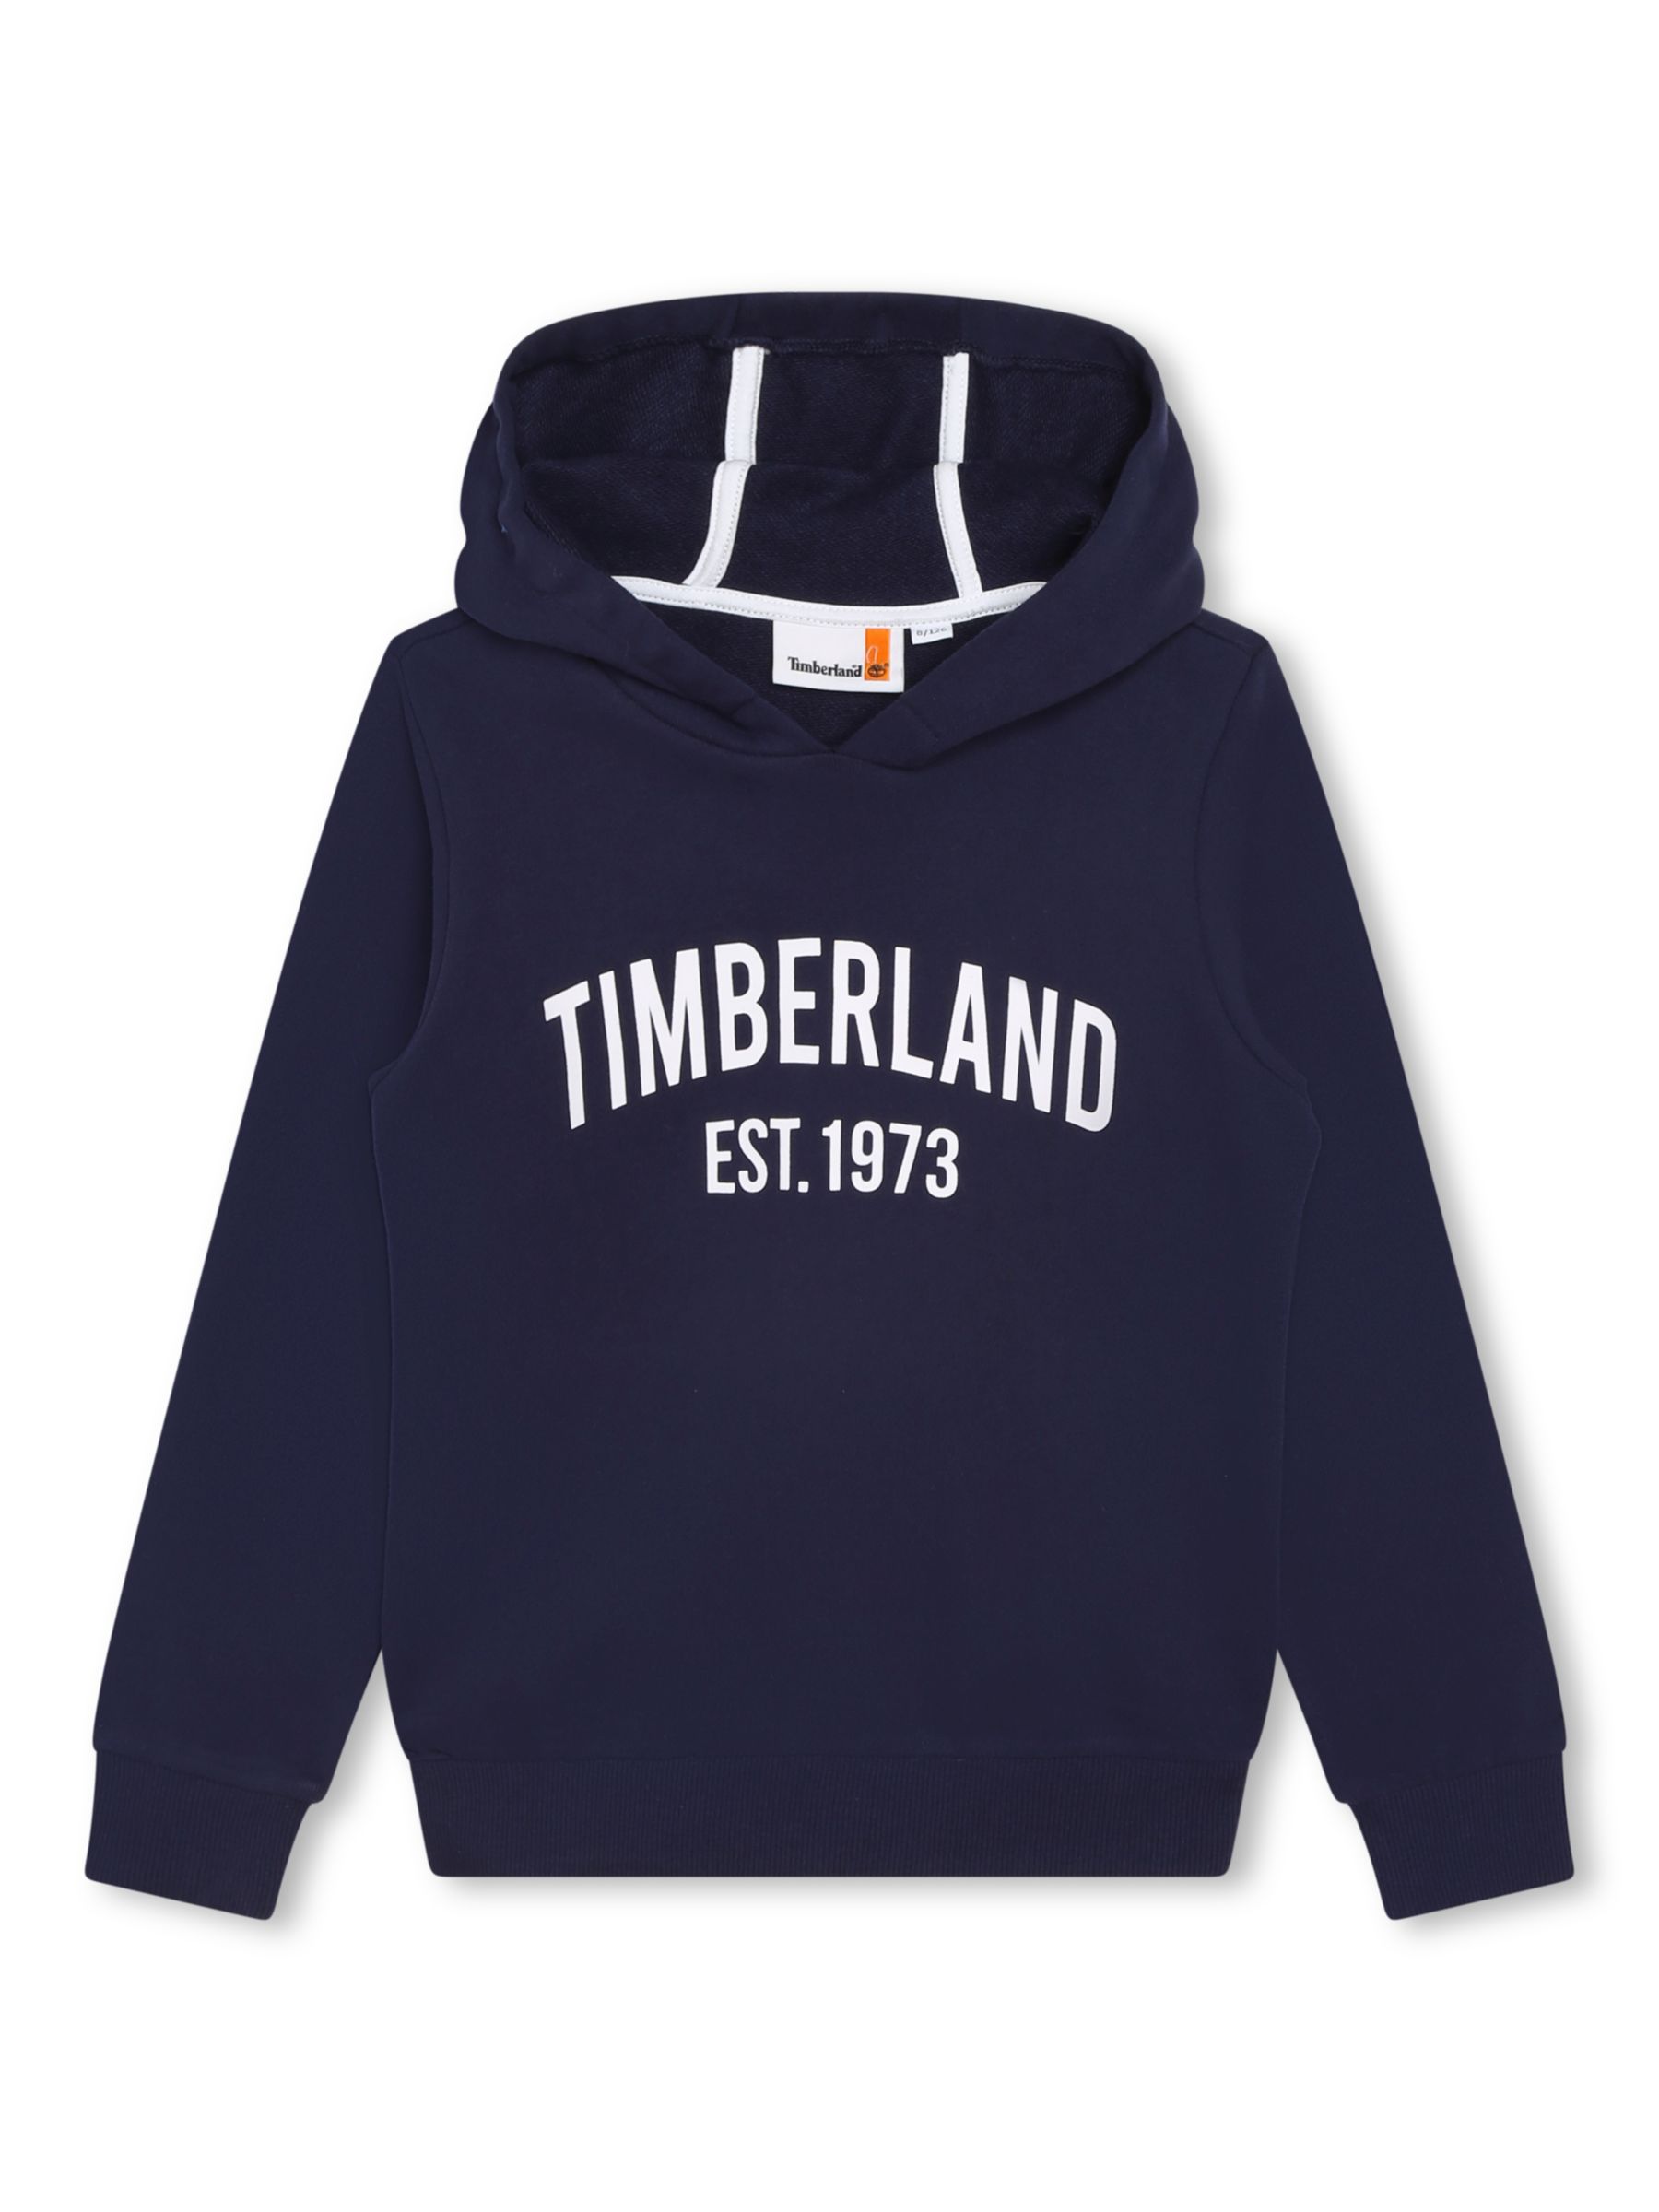 Timberland Kids' Logo Embroidered Hoodie, Navy/White, 4 years